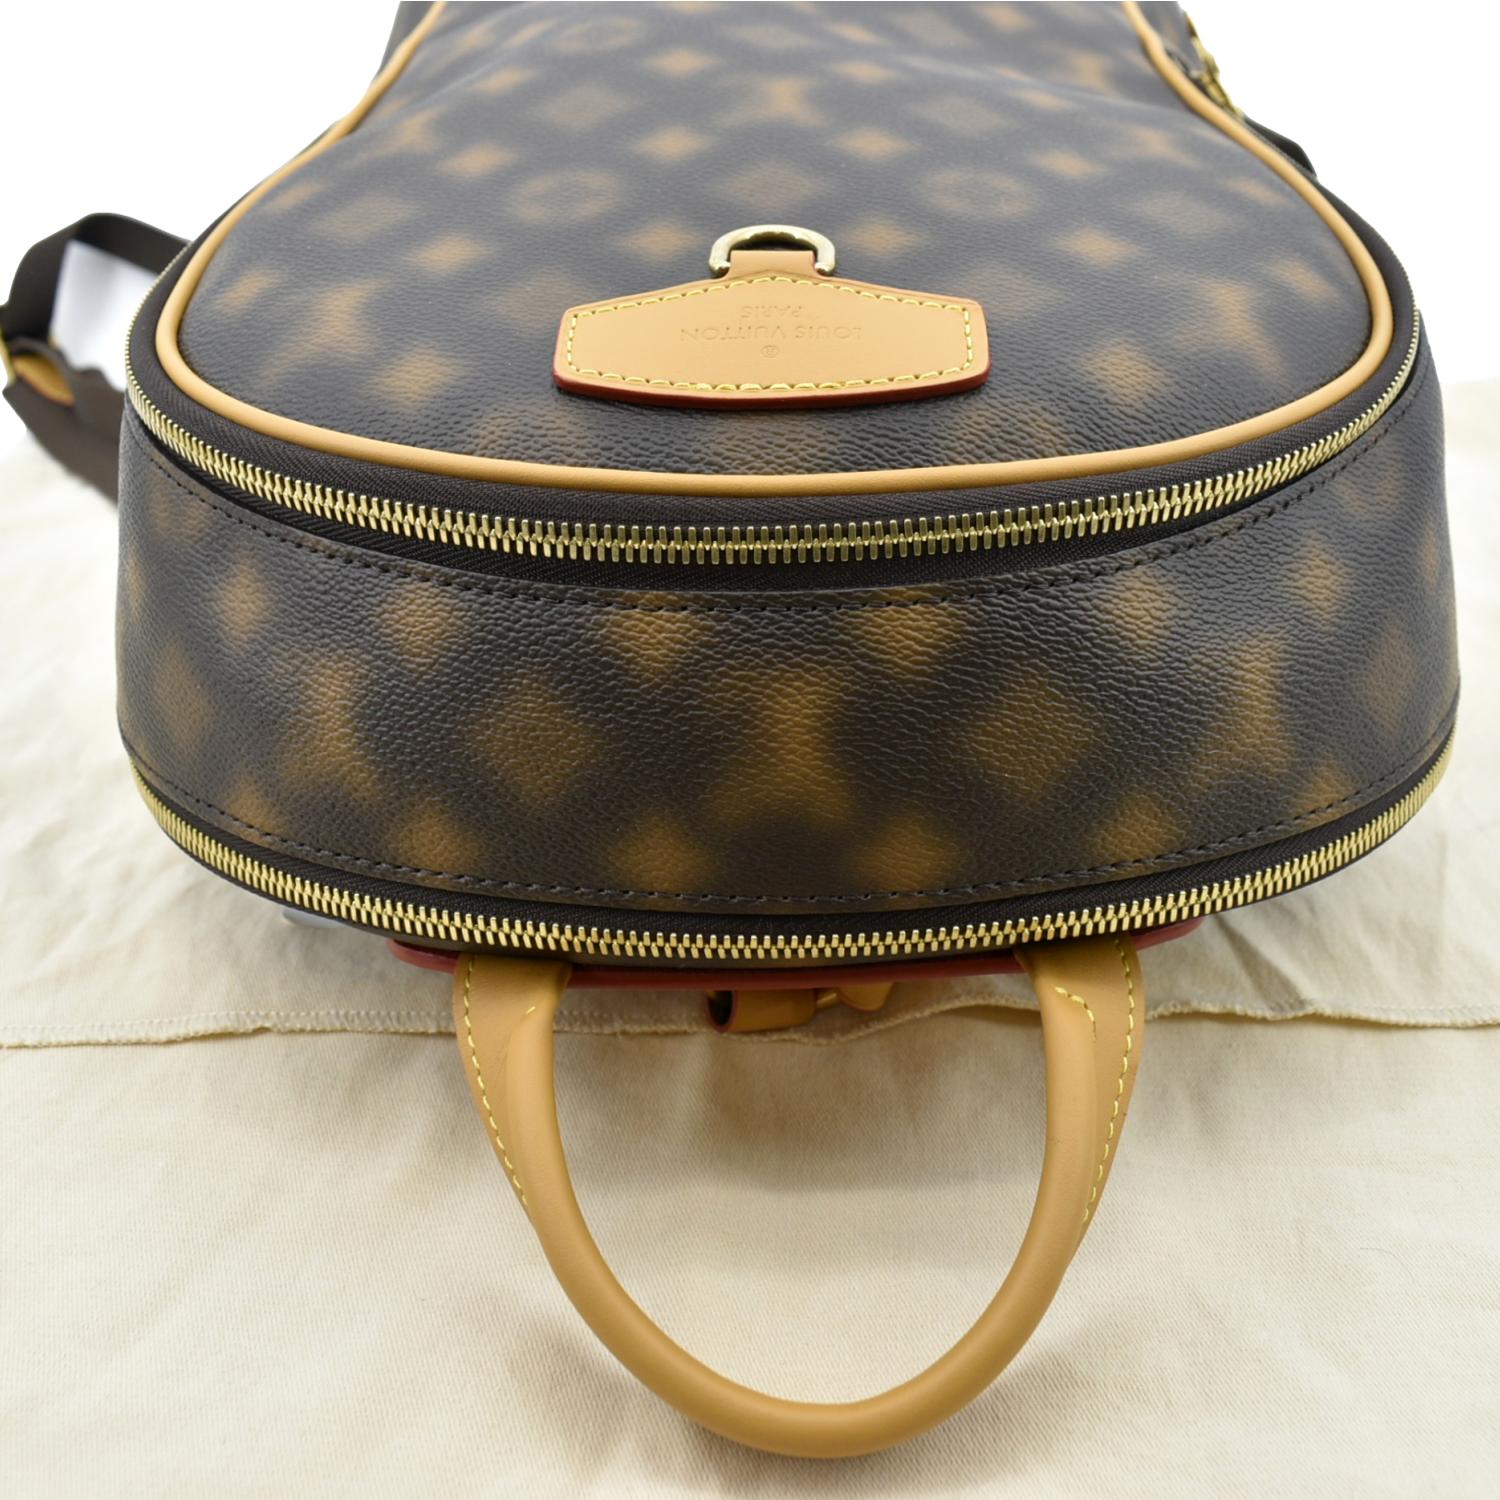 Louis Vuitton Ellipse Backpack Limited Edition Blurry Monogram Canvas Brown  2110441